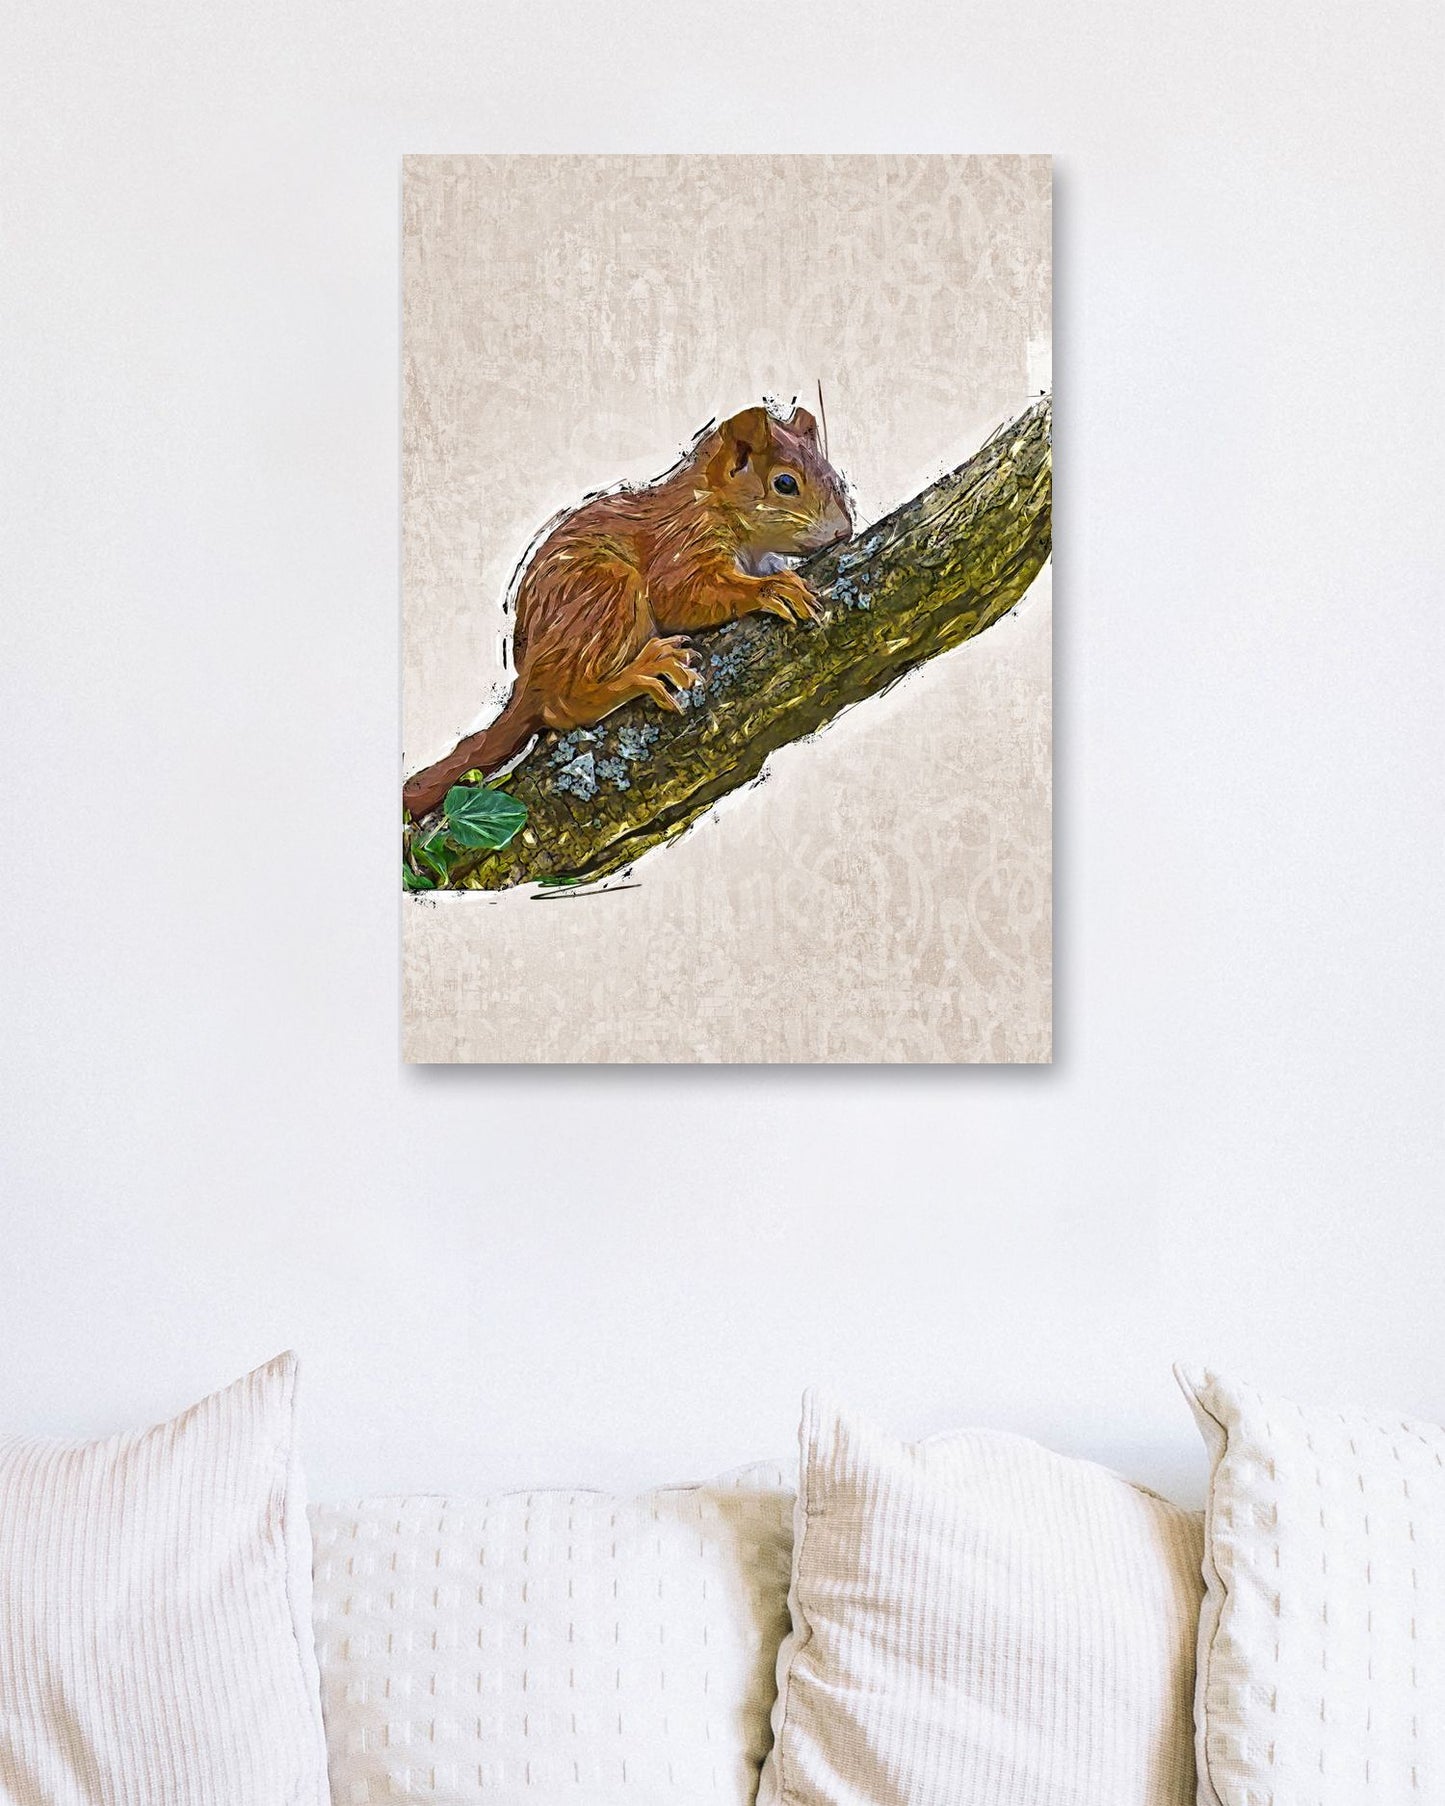 squirrel cute paintings - @TRANDINGPOSTER